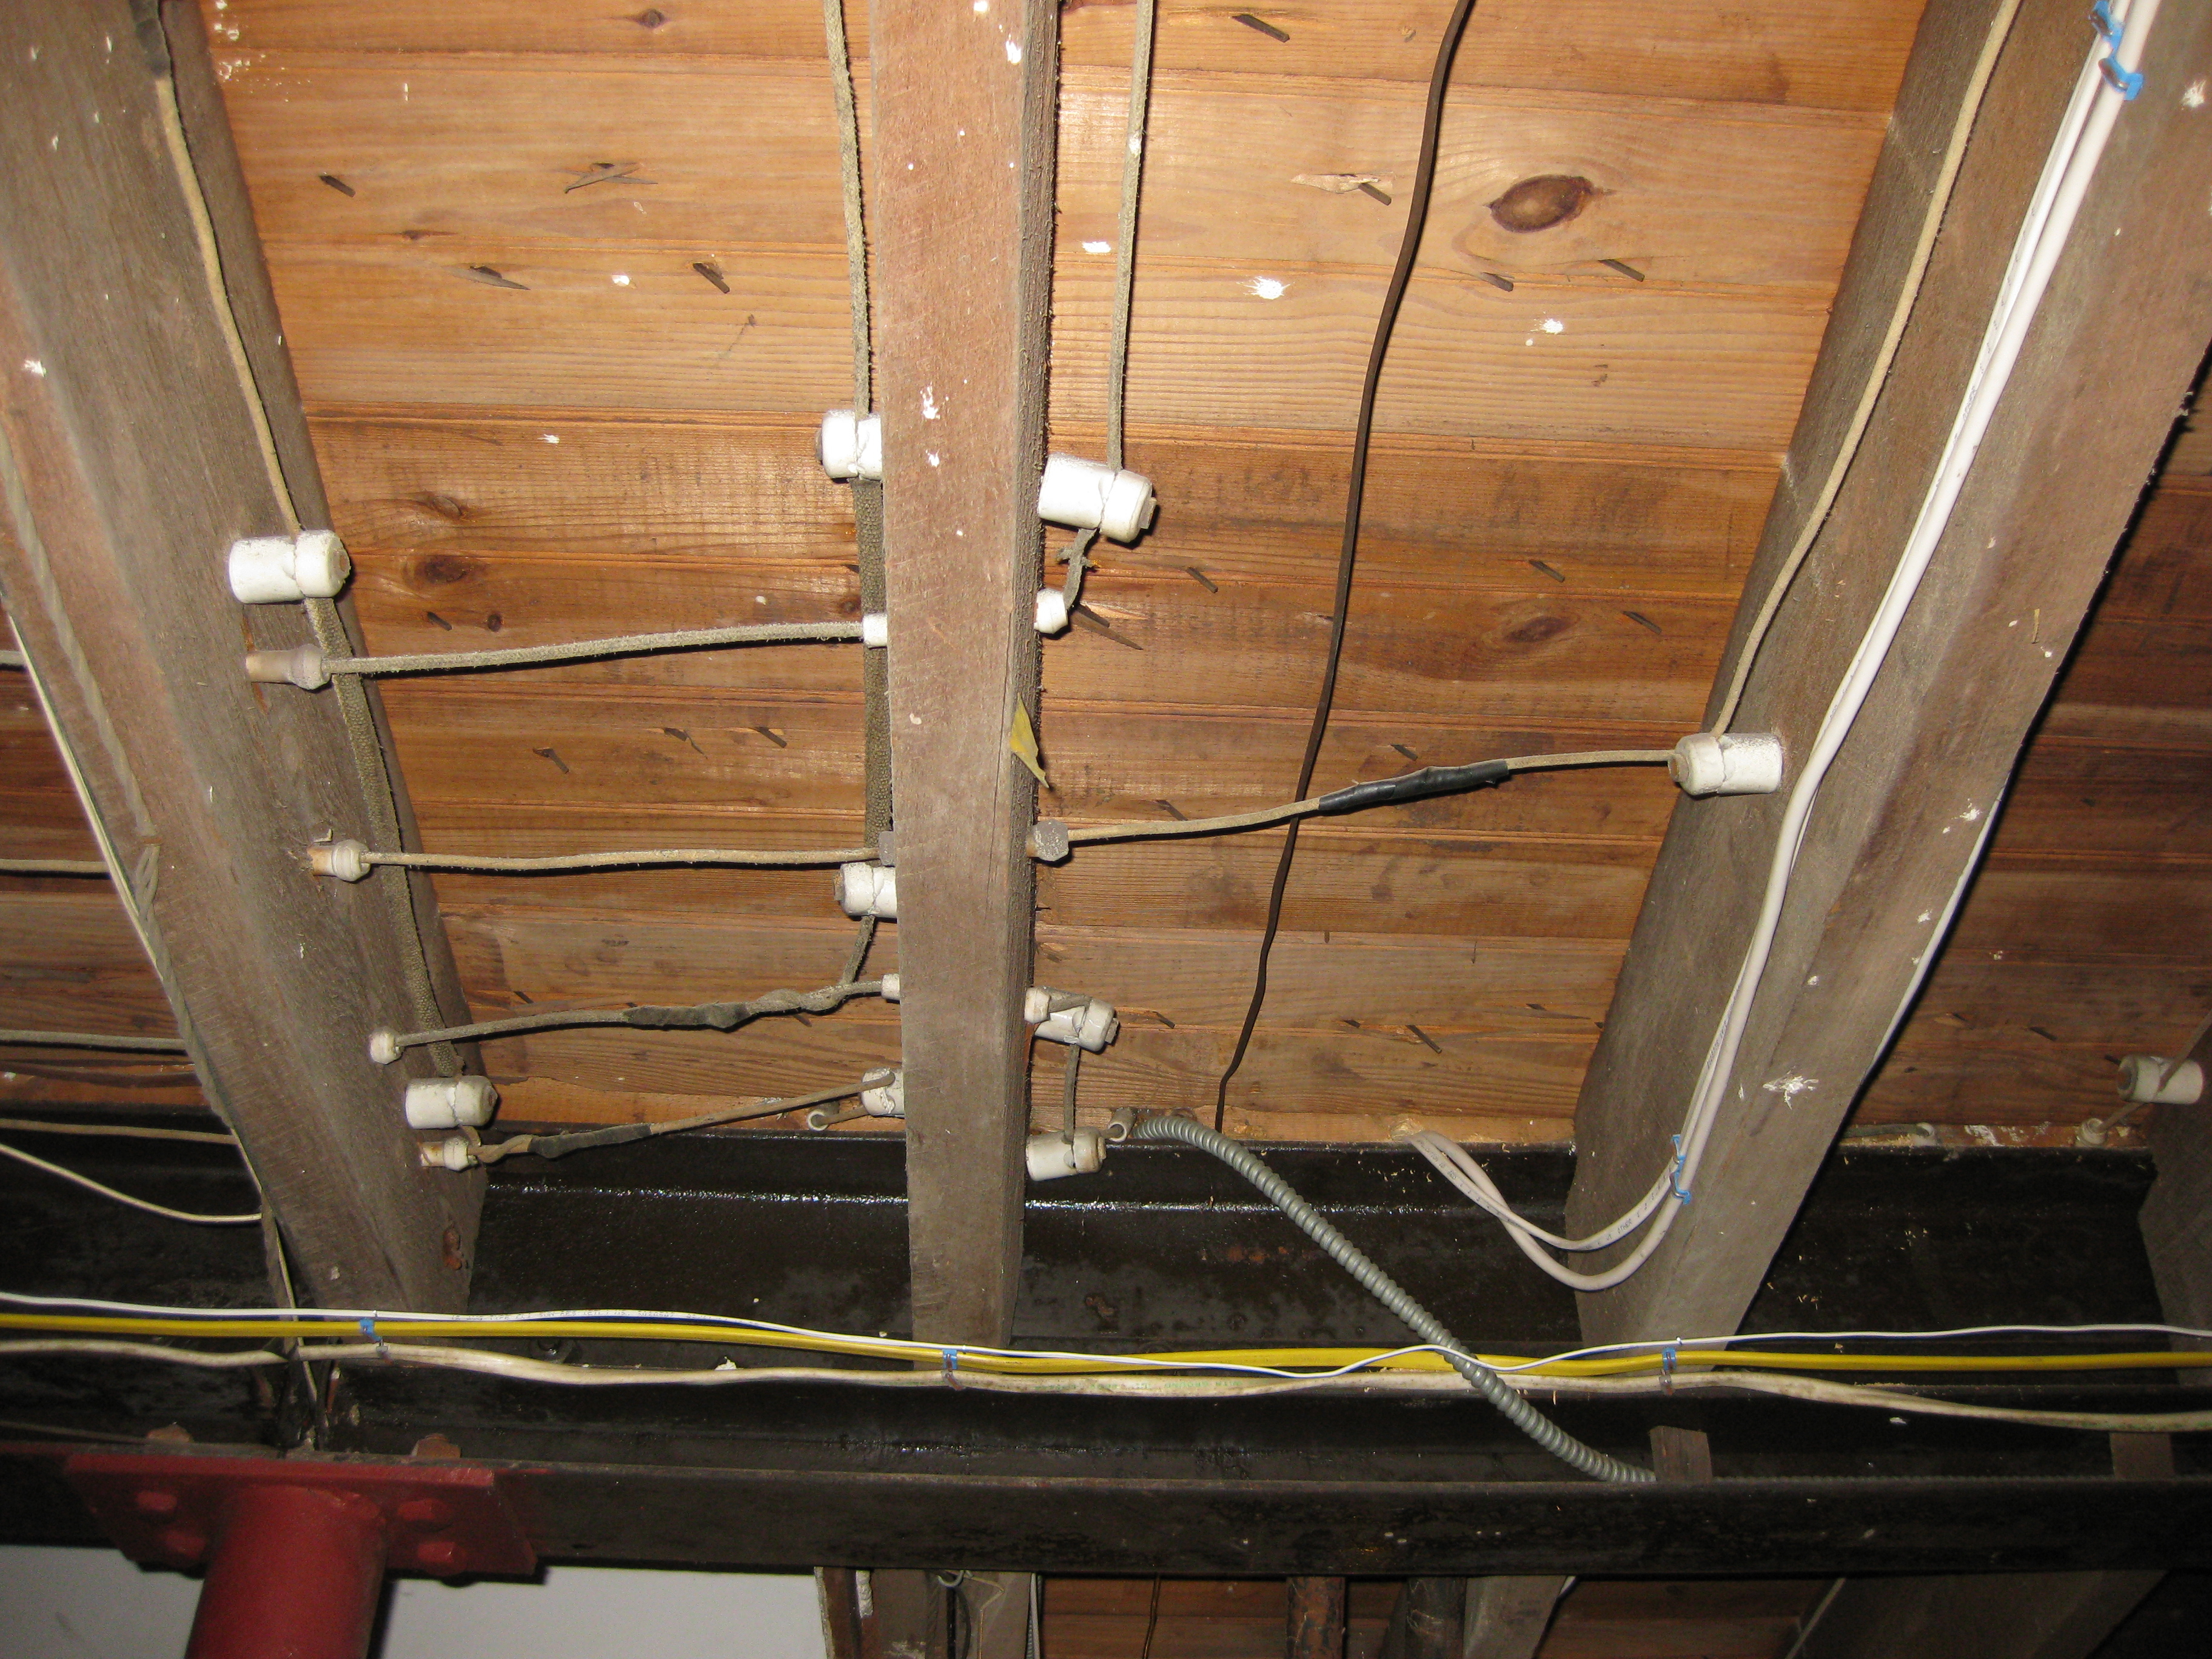 Knob And Tube Wiring Fuse Box | Wiring Diagram - Knob And Tube Wiring Diagram